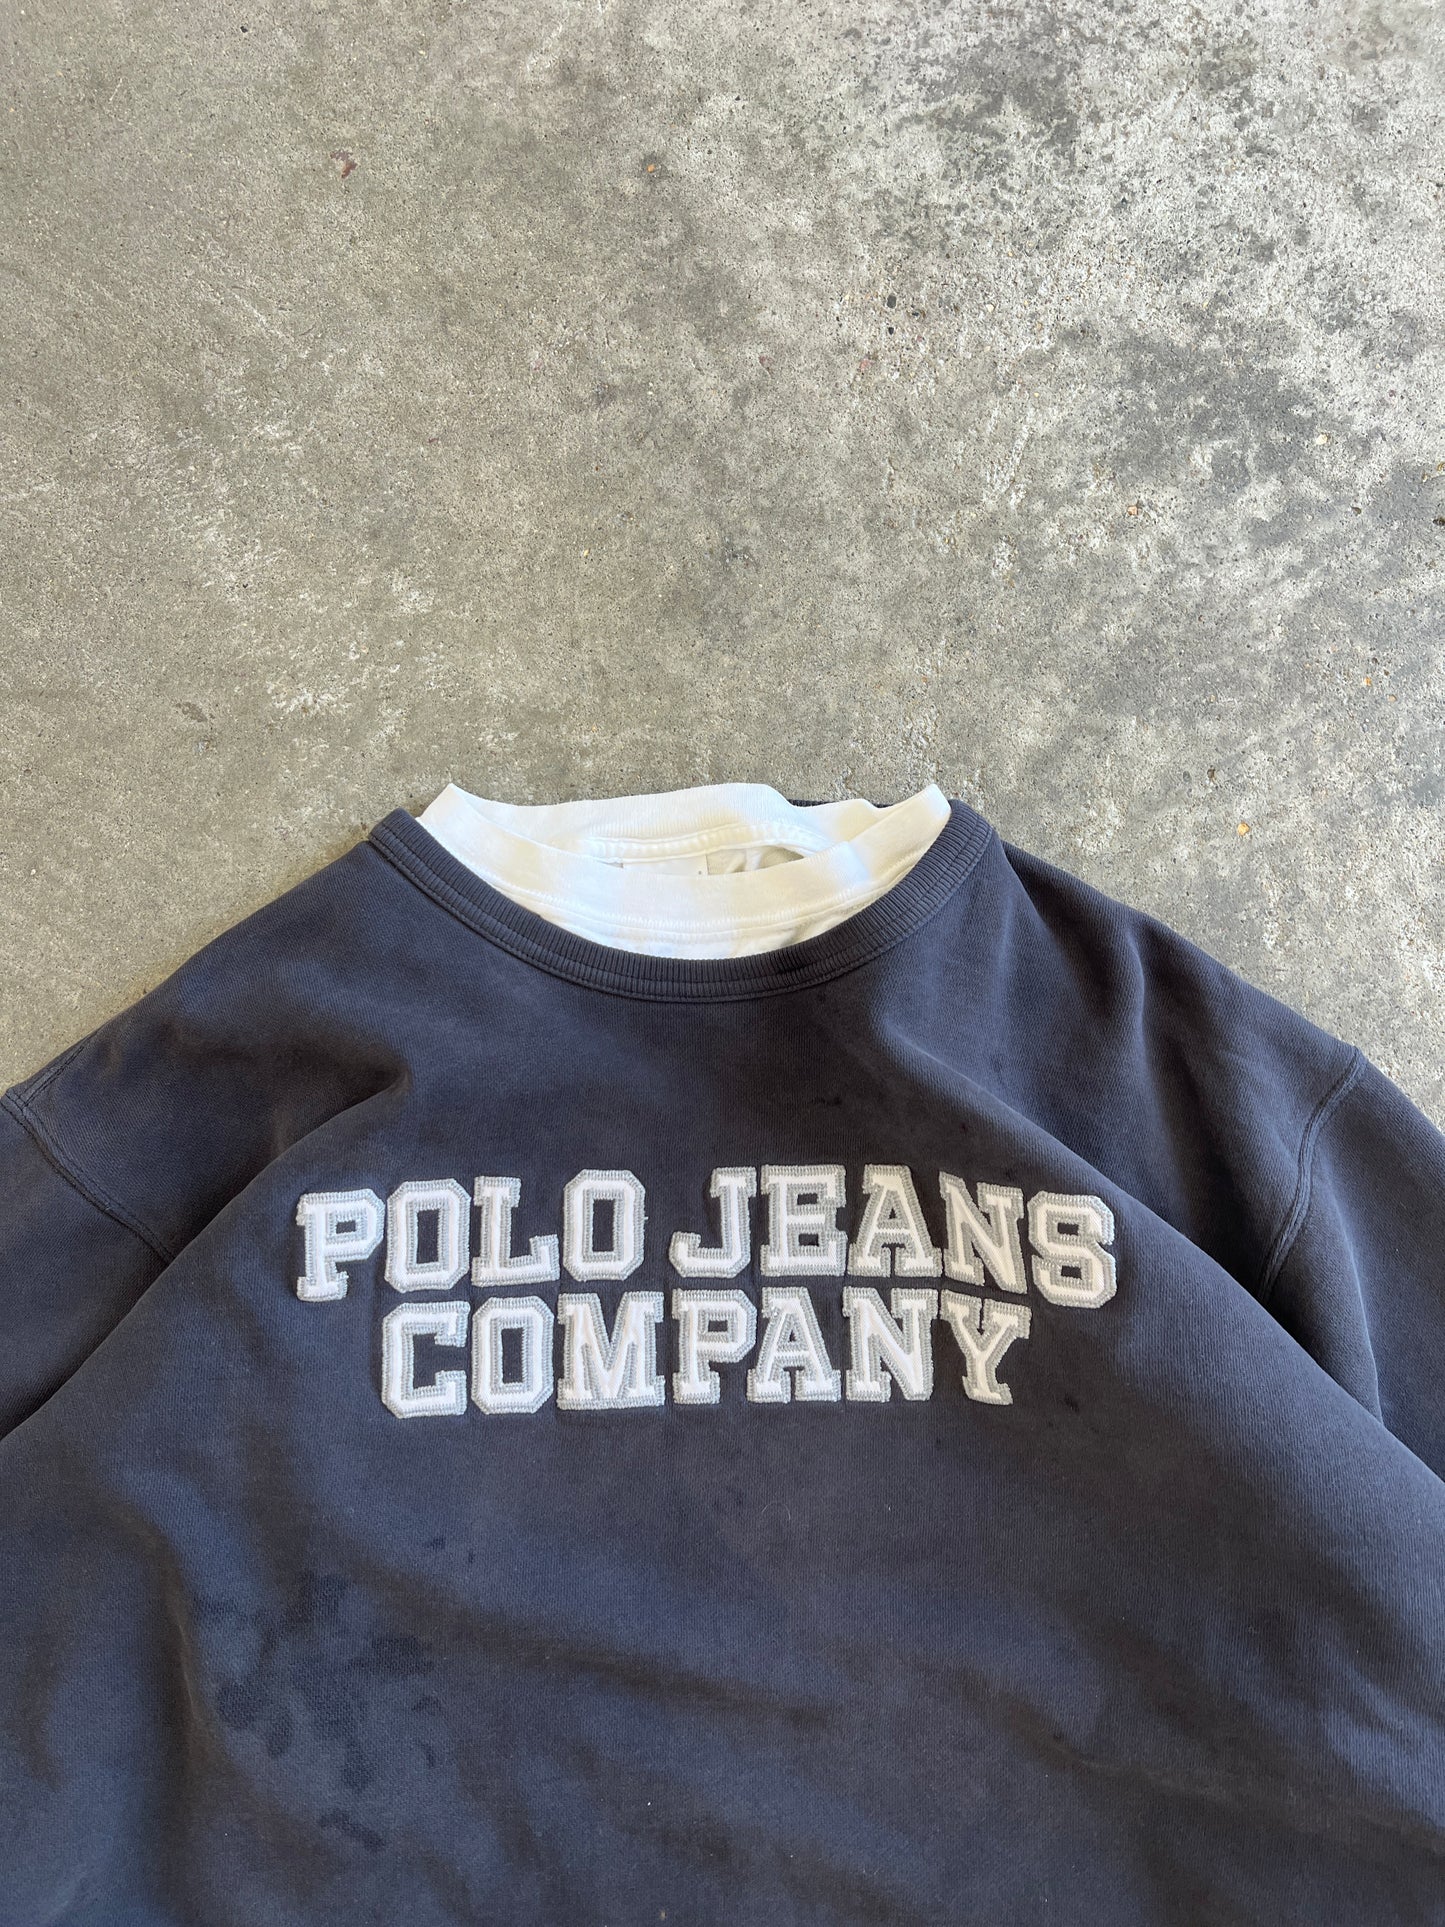 Vintage Polo Jeans Crew - XL